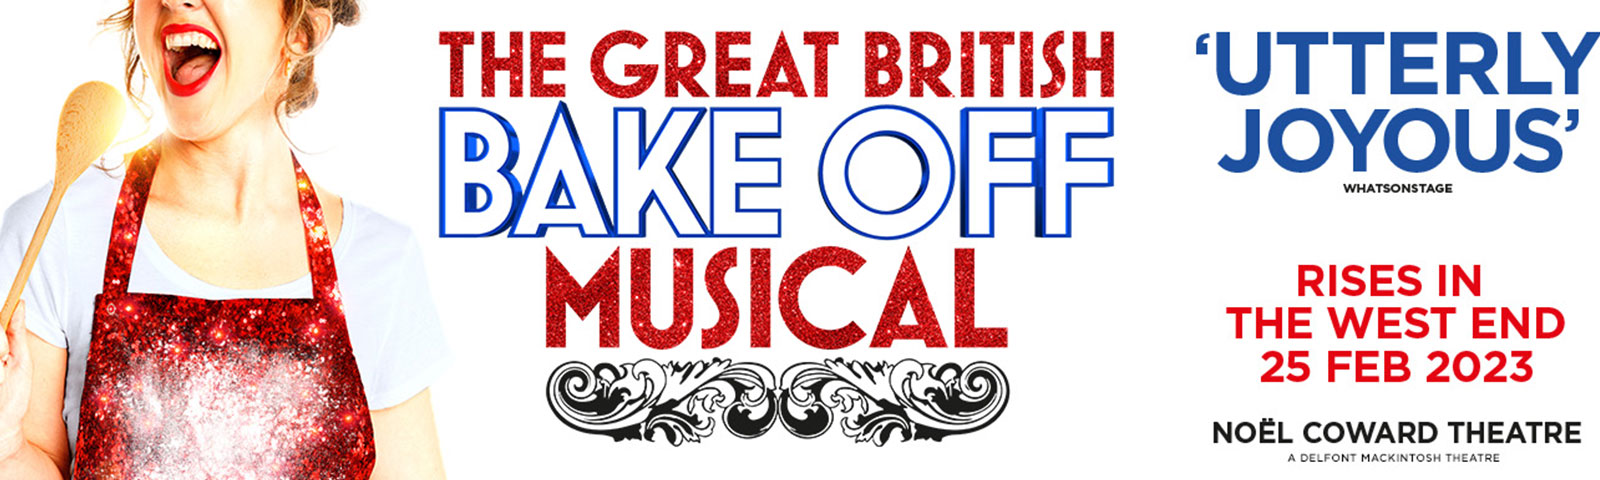 great-british-bake-off-musical